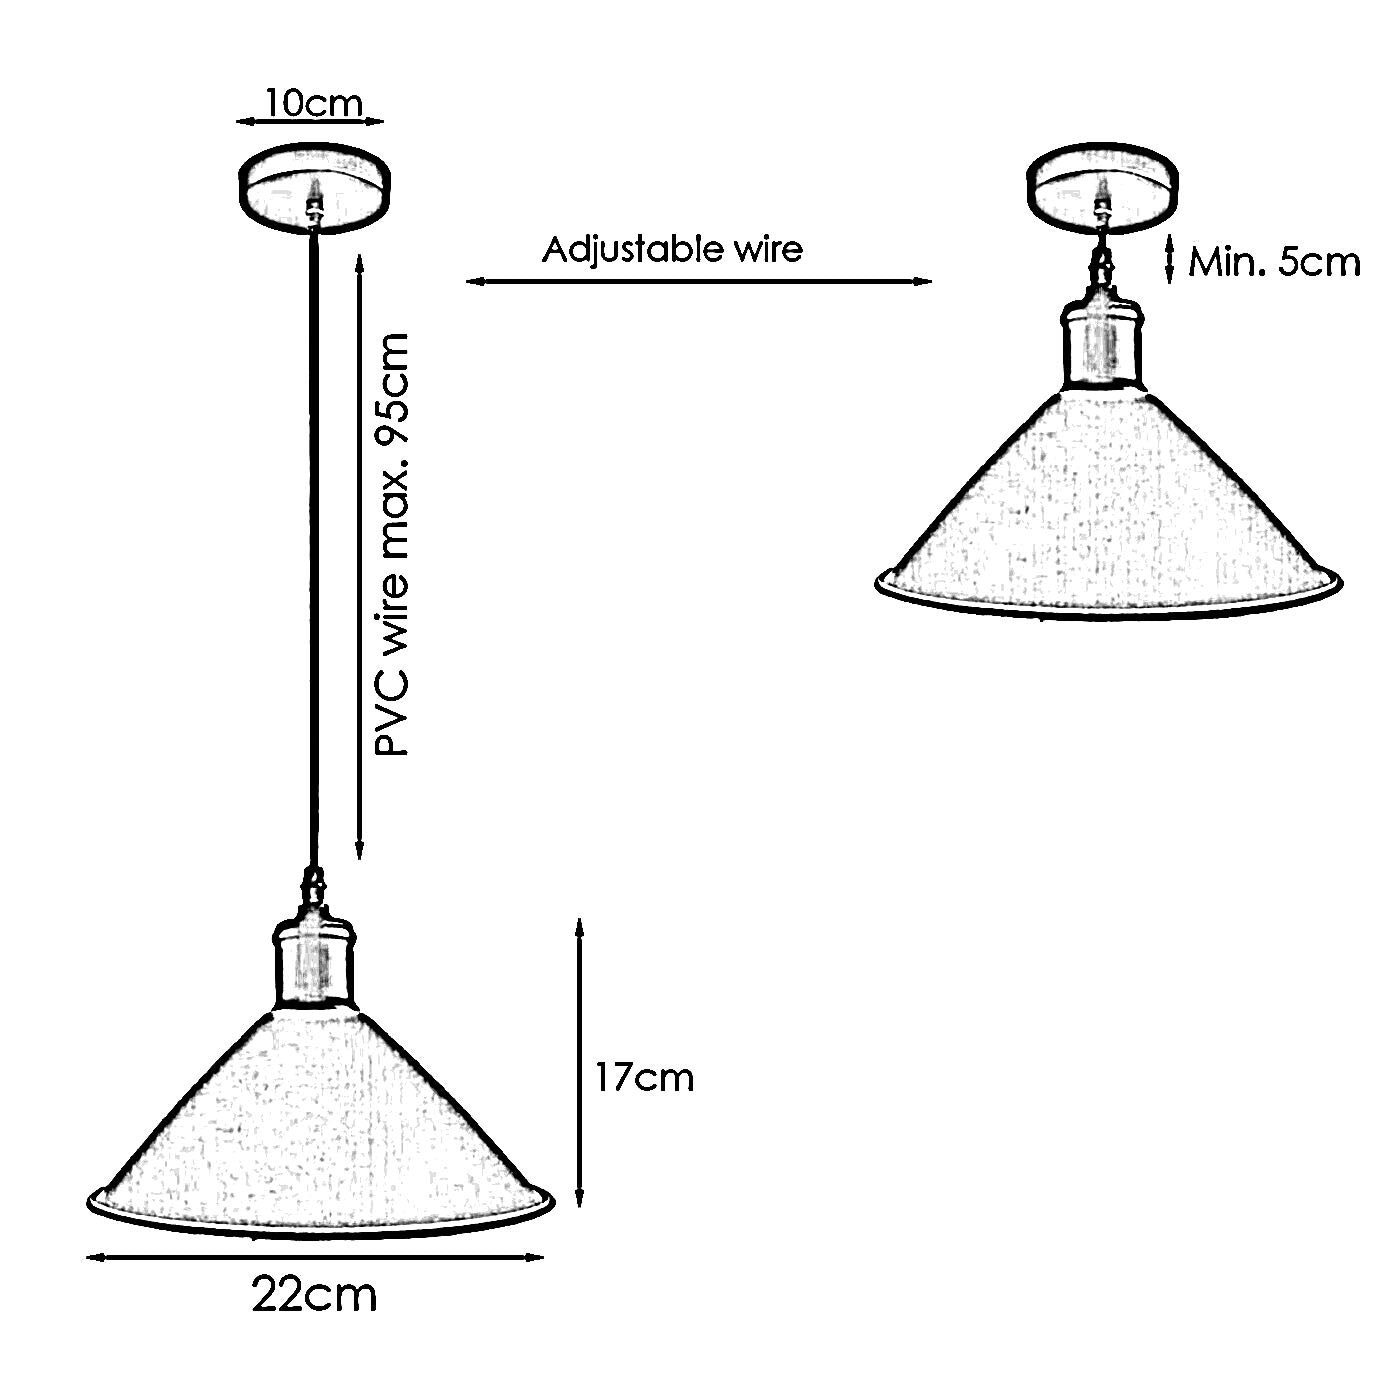 Black Pendant Lamp Industrial style Decorative Ceiling lamp~1542 - LEDSone UK Ltd